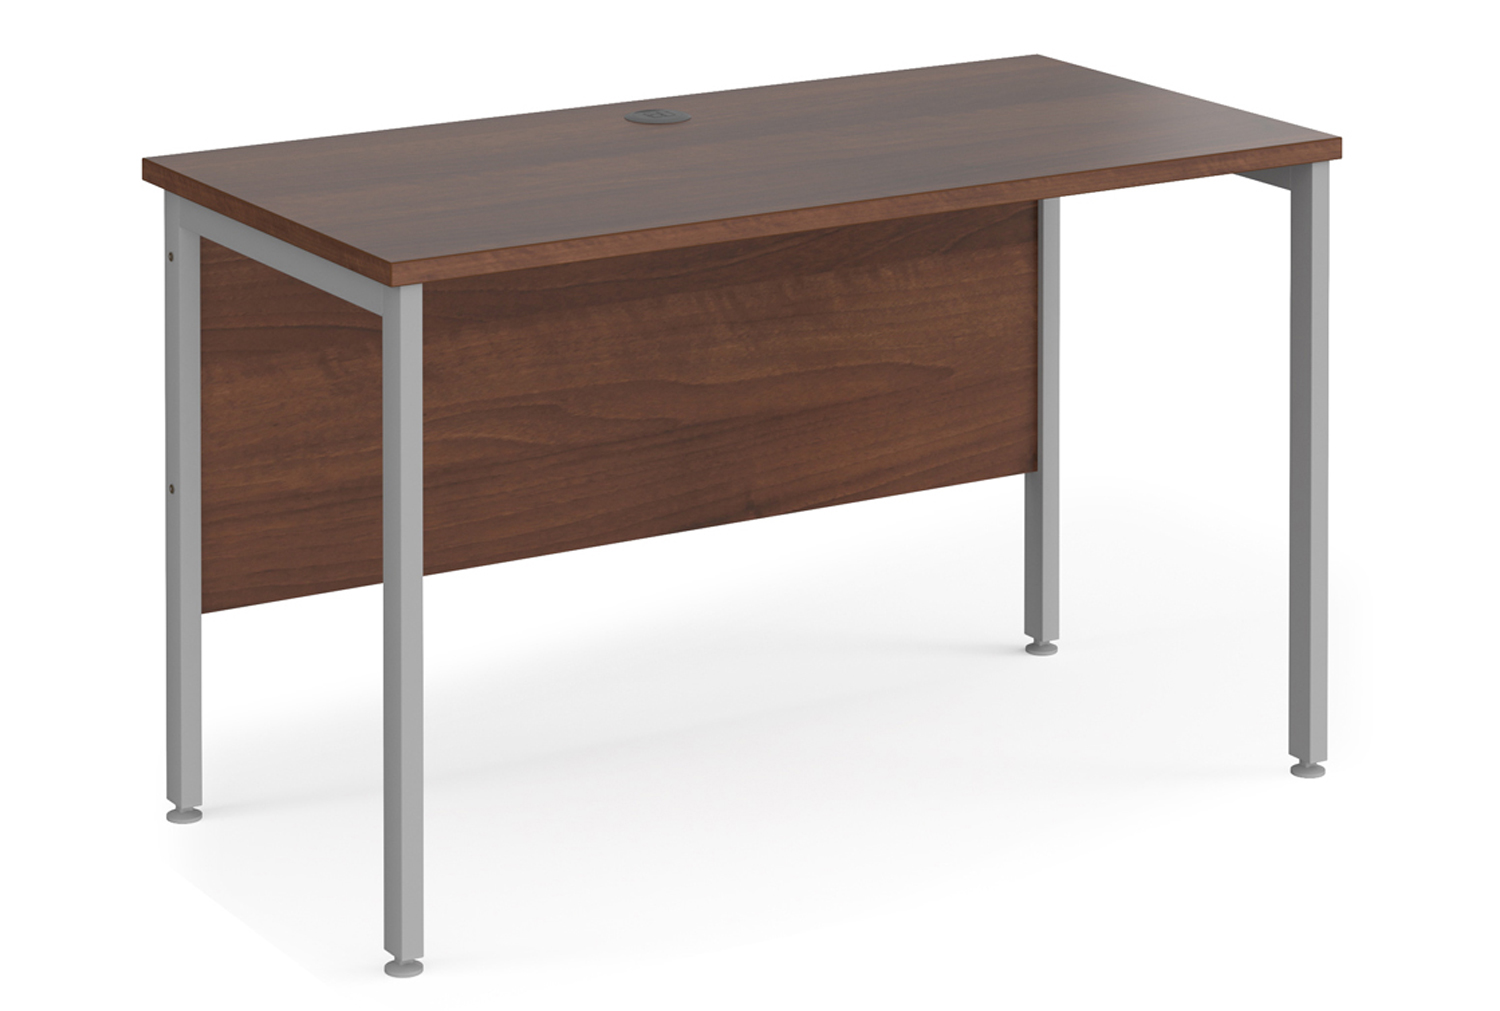 Value Line Deluxe H-Leg Narrow Rectangular Office Desk (Silver Legs), 120w60dx73h (cm), Walnut, Fully Installed